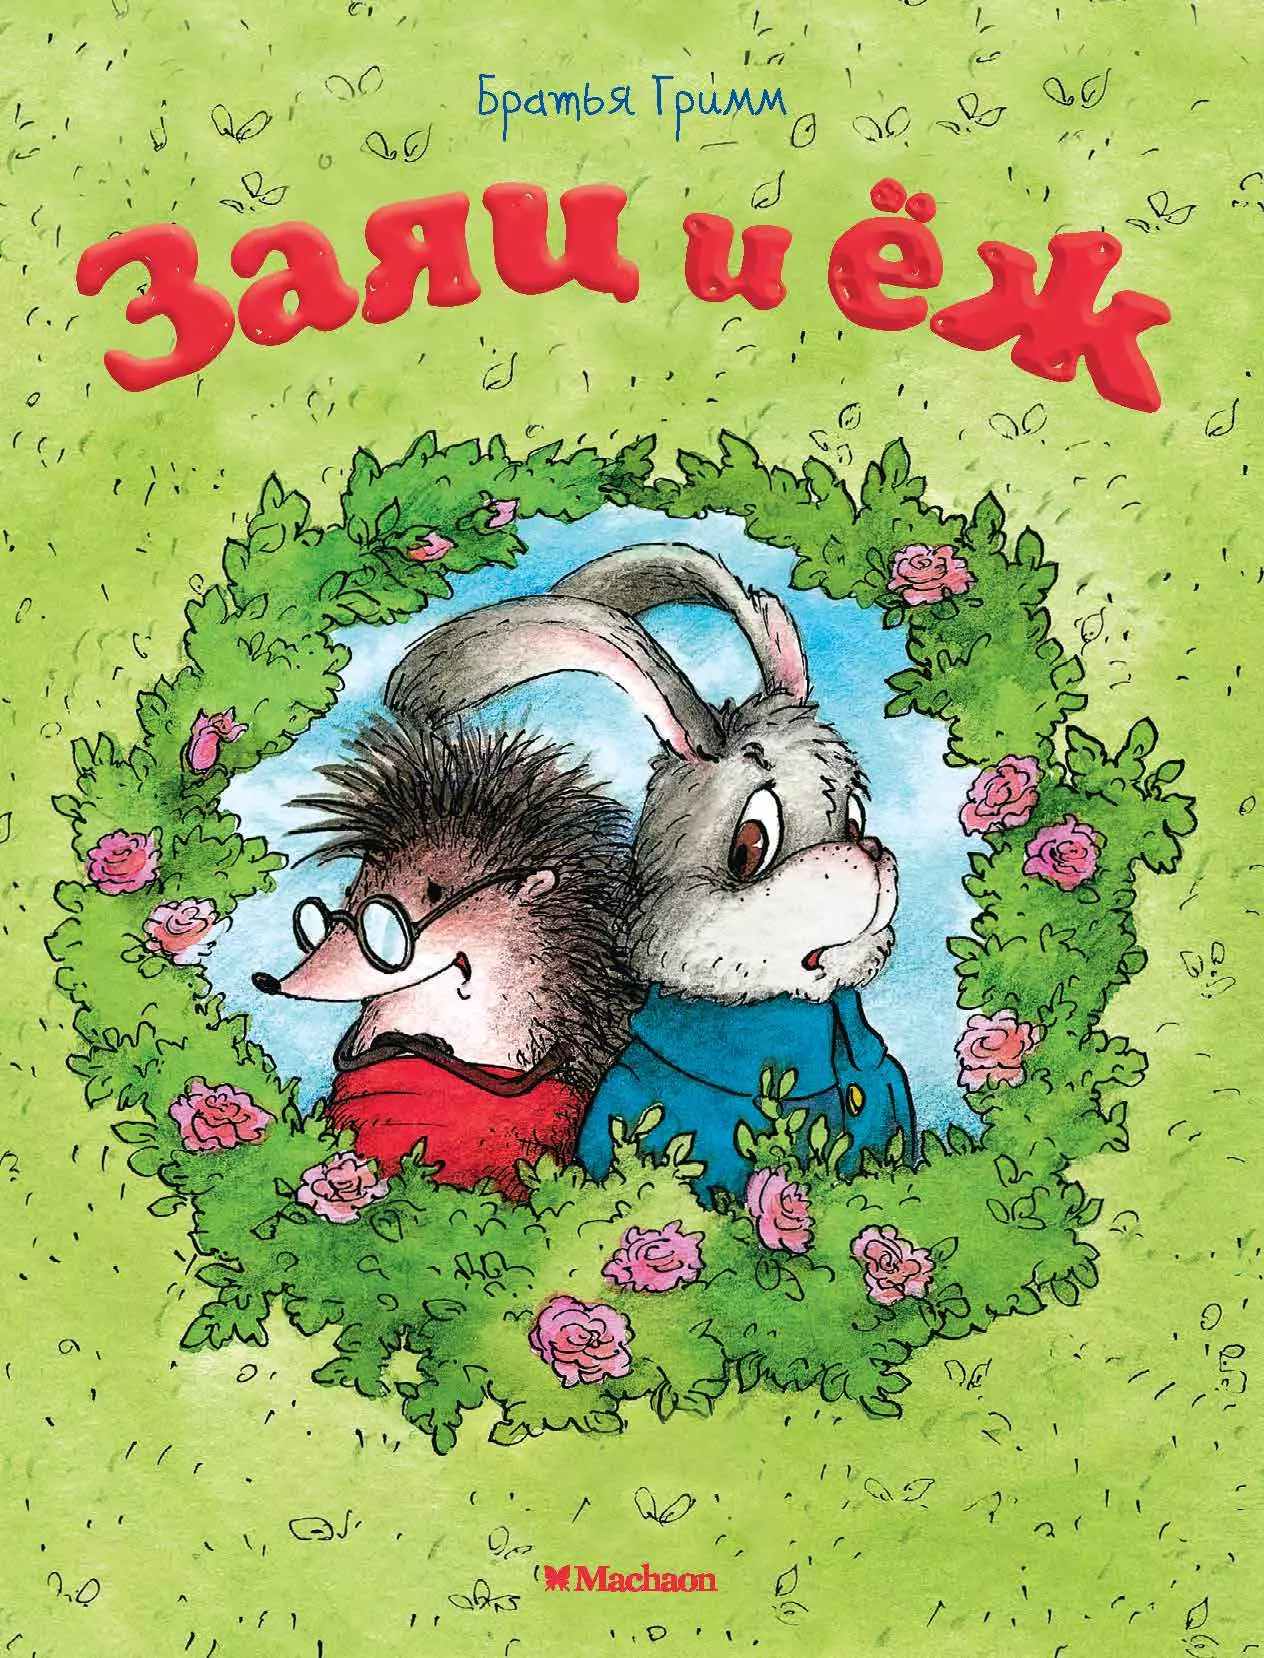 Книга про зайца. Братья Гримм "заяц и еж". Сказка заяц и еж братья Гримм. Книга Гримм заяц и еж. Автор братья Гримм еж и заяц.